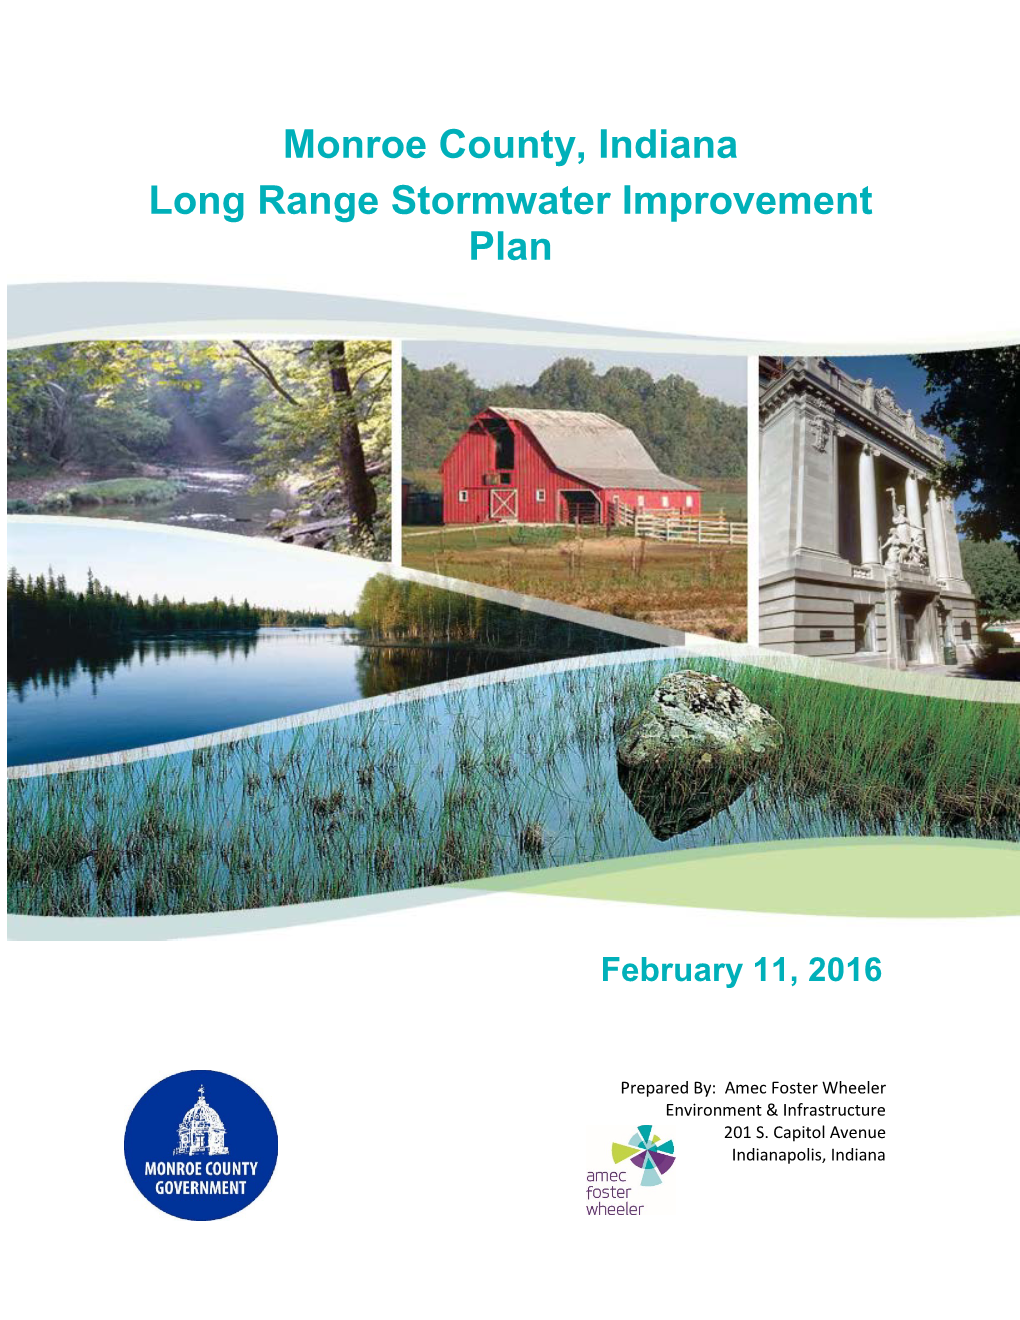 Monroe County, Indiana Long Range Stormwater Improvement Plan